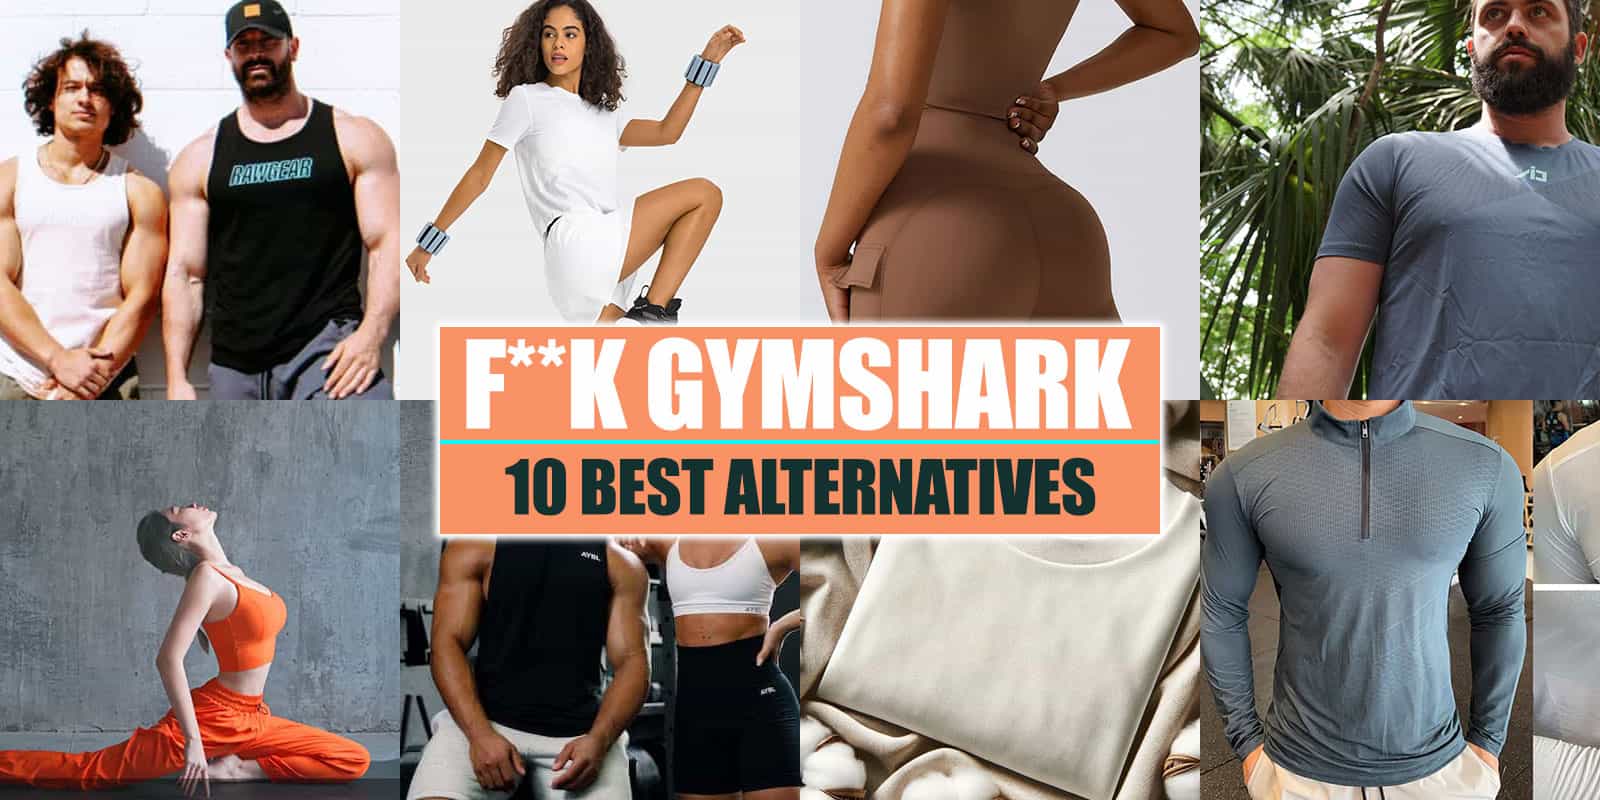 Gym Shark Crop Top - Yoga Shirts - AliExpress